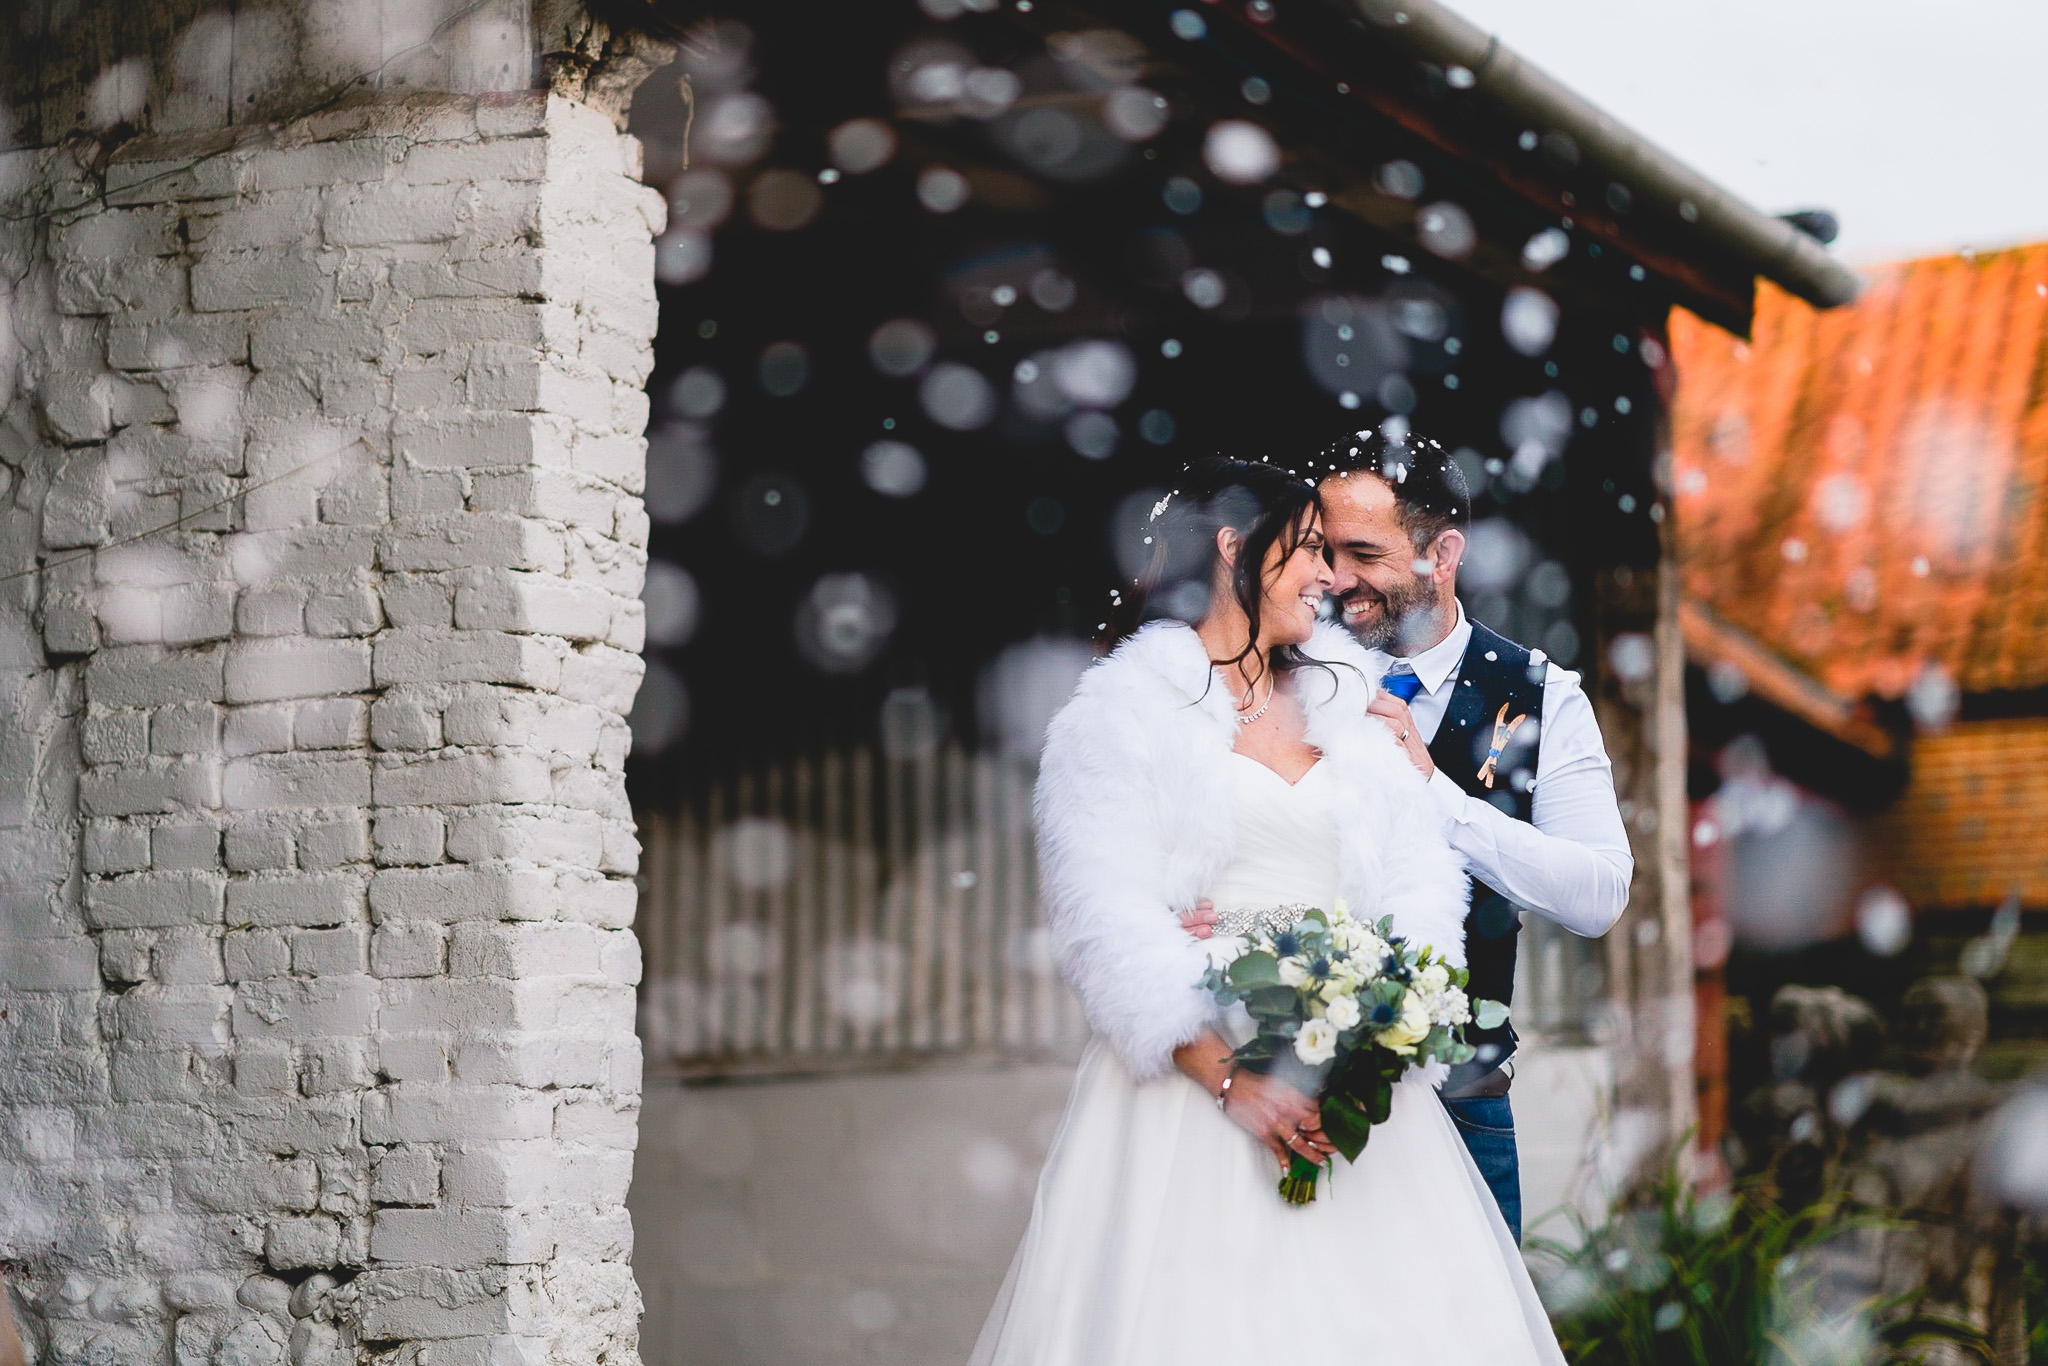 winter wedding photography at glebe farm barn in norfolk